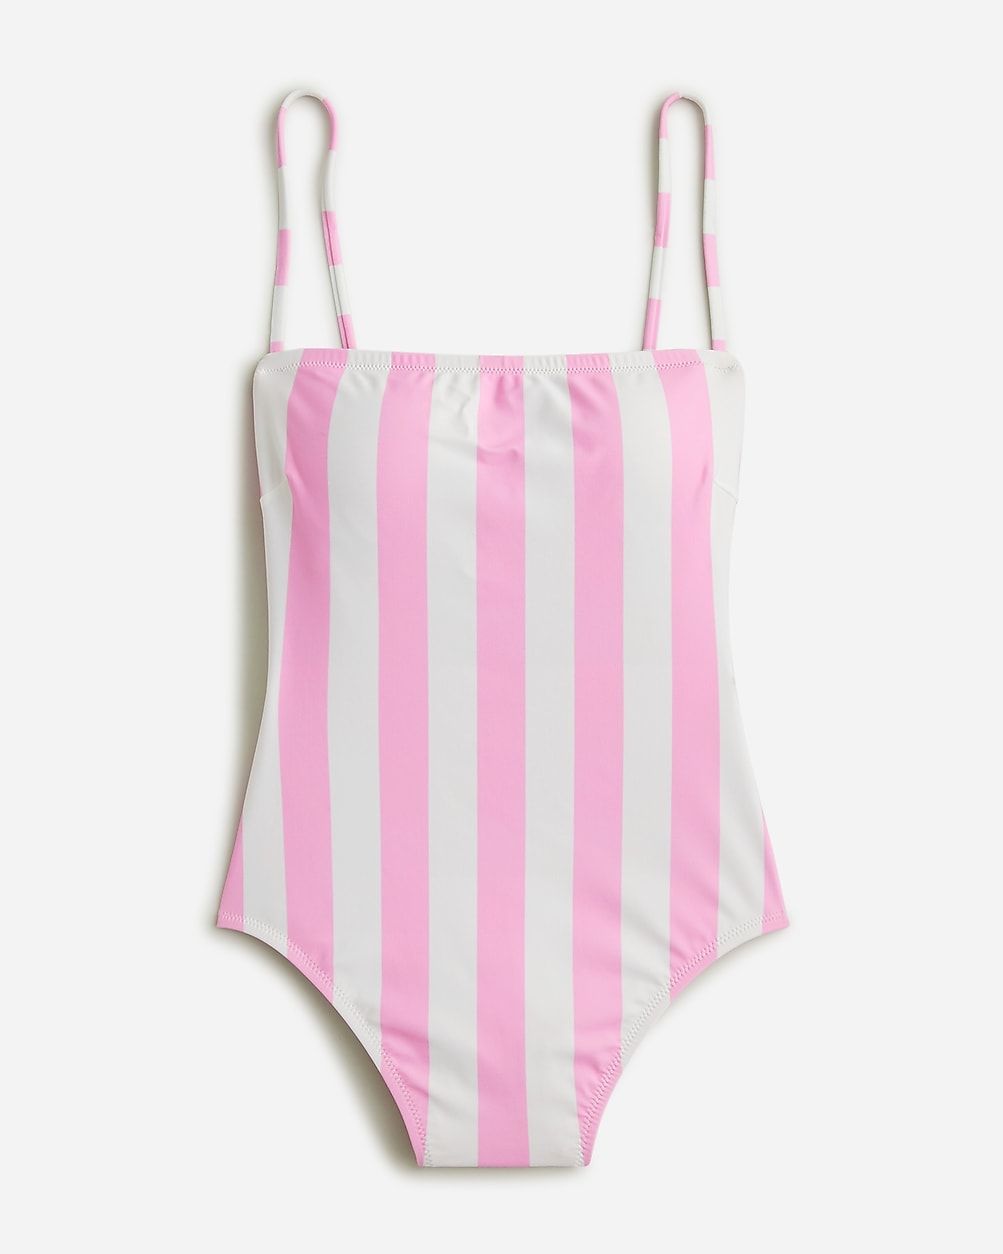 Squareneck one-piece swimsuit in pink stripe | J.Crew US